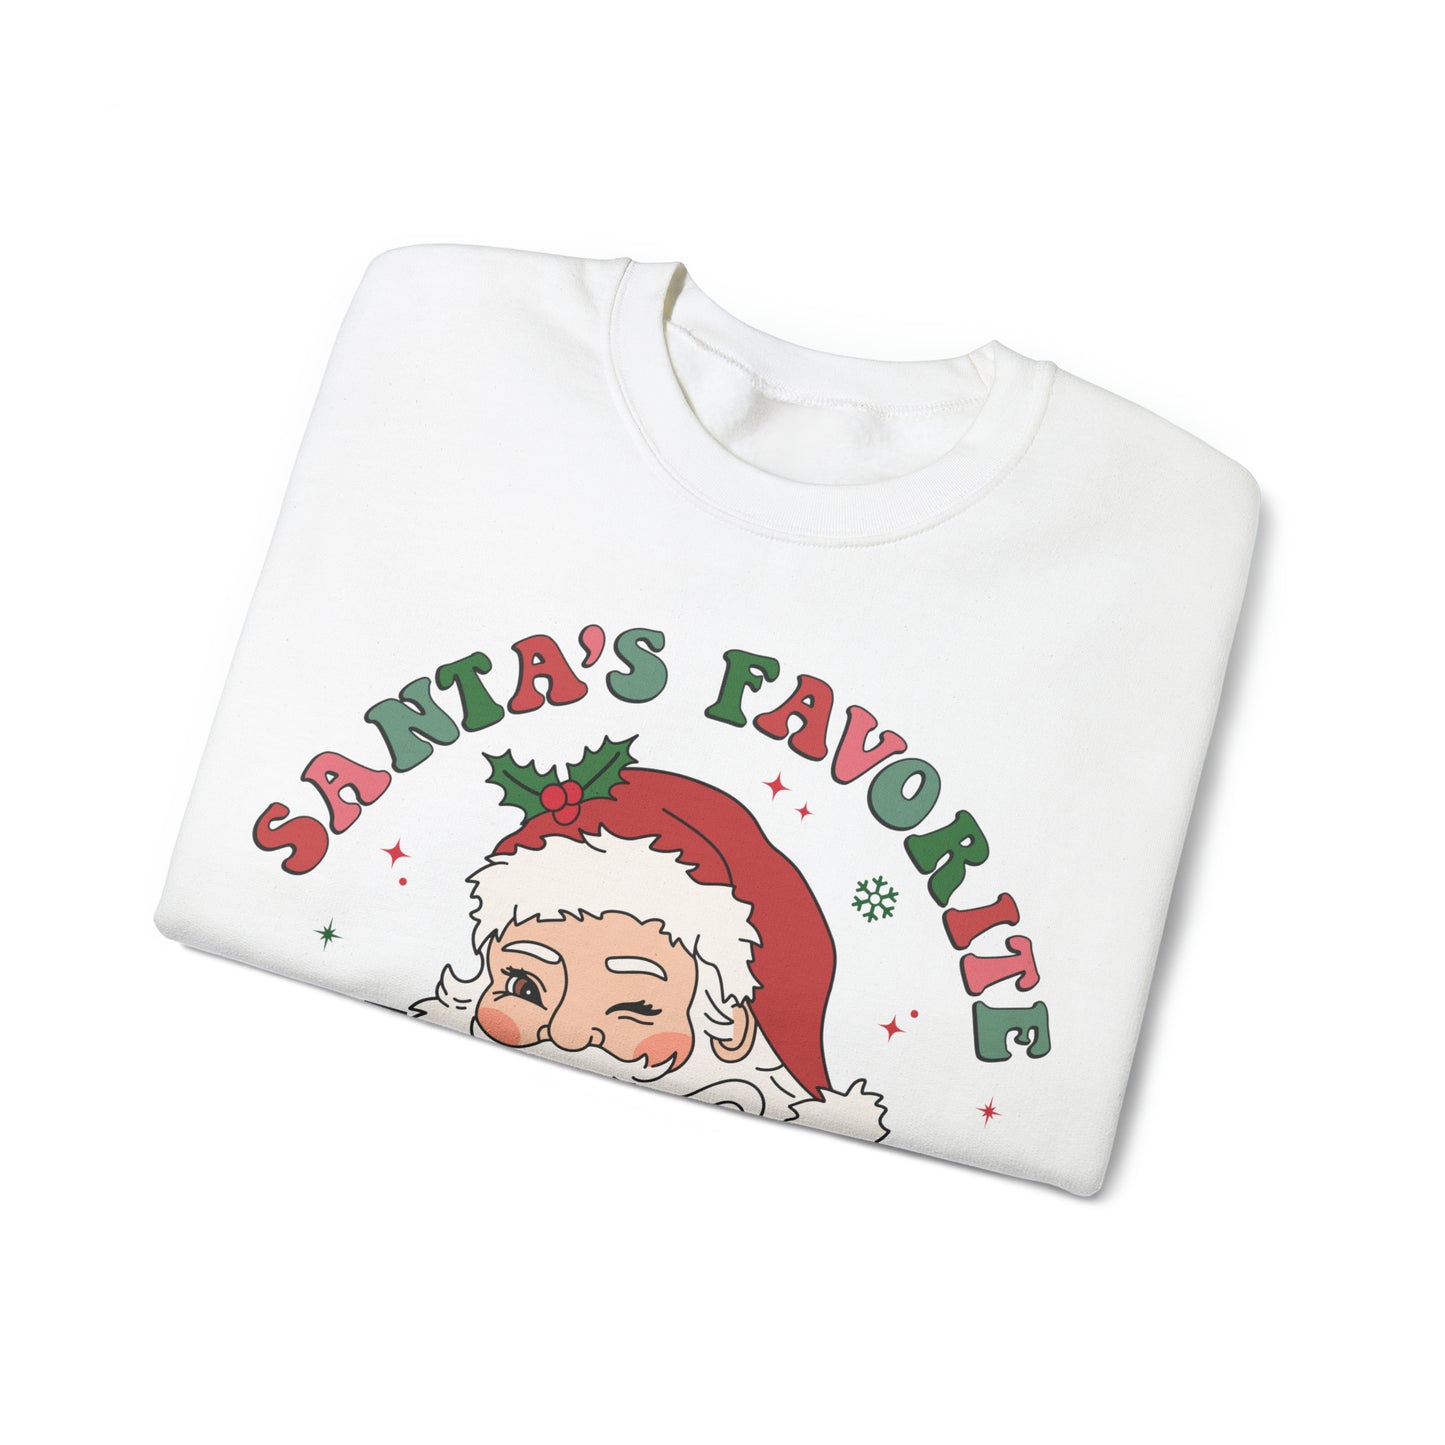 Santa's Favorite Dog Mom Crewneck Sweatshirt